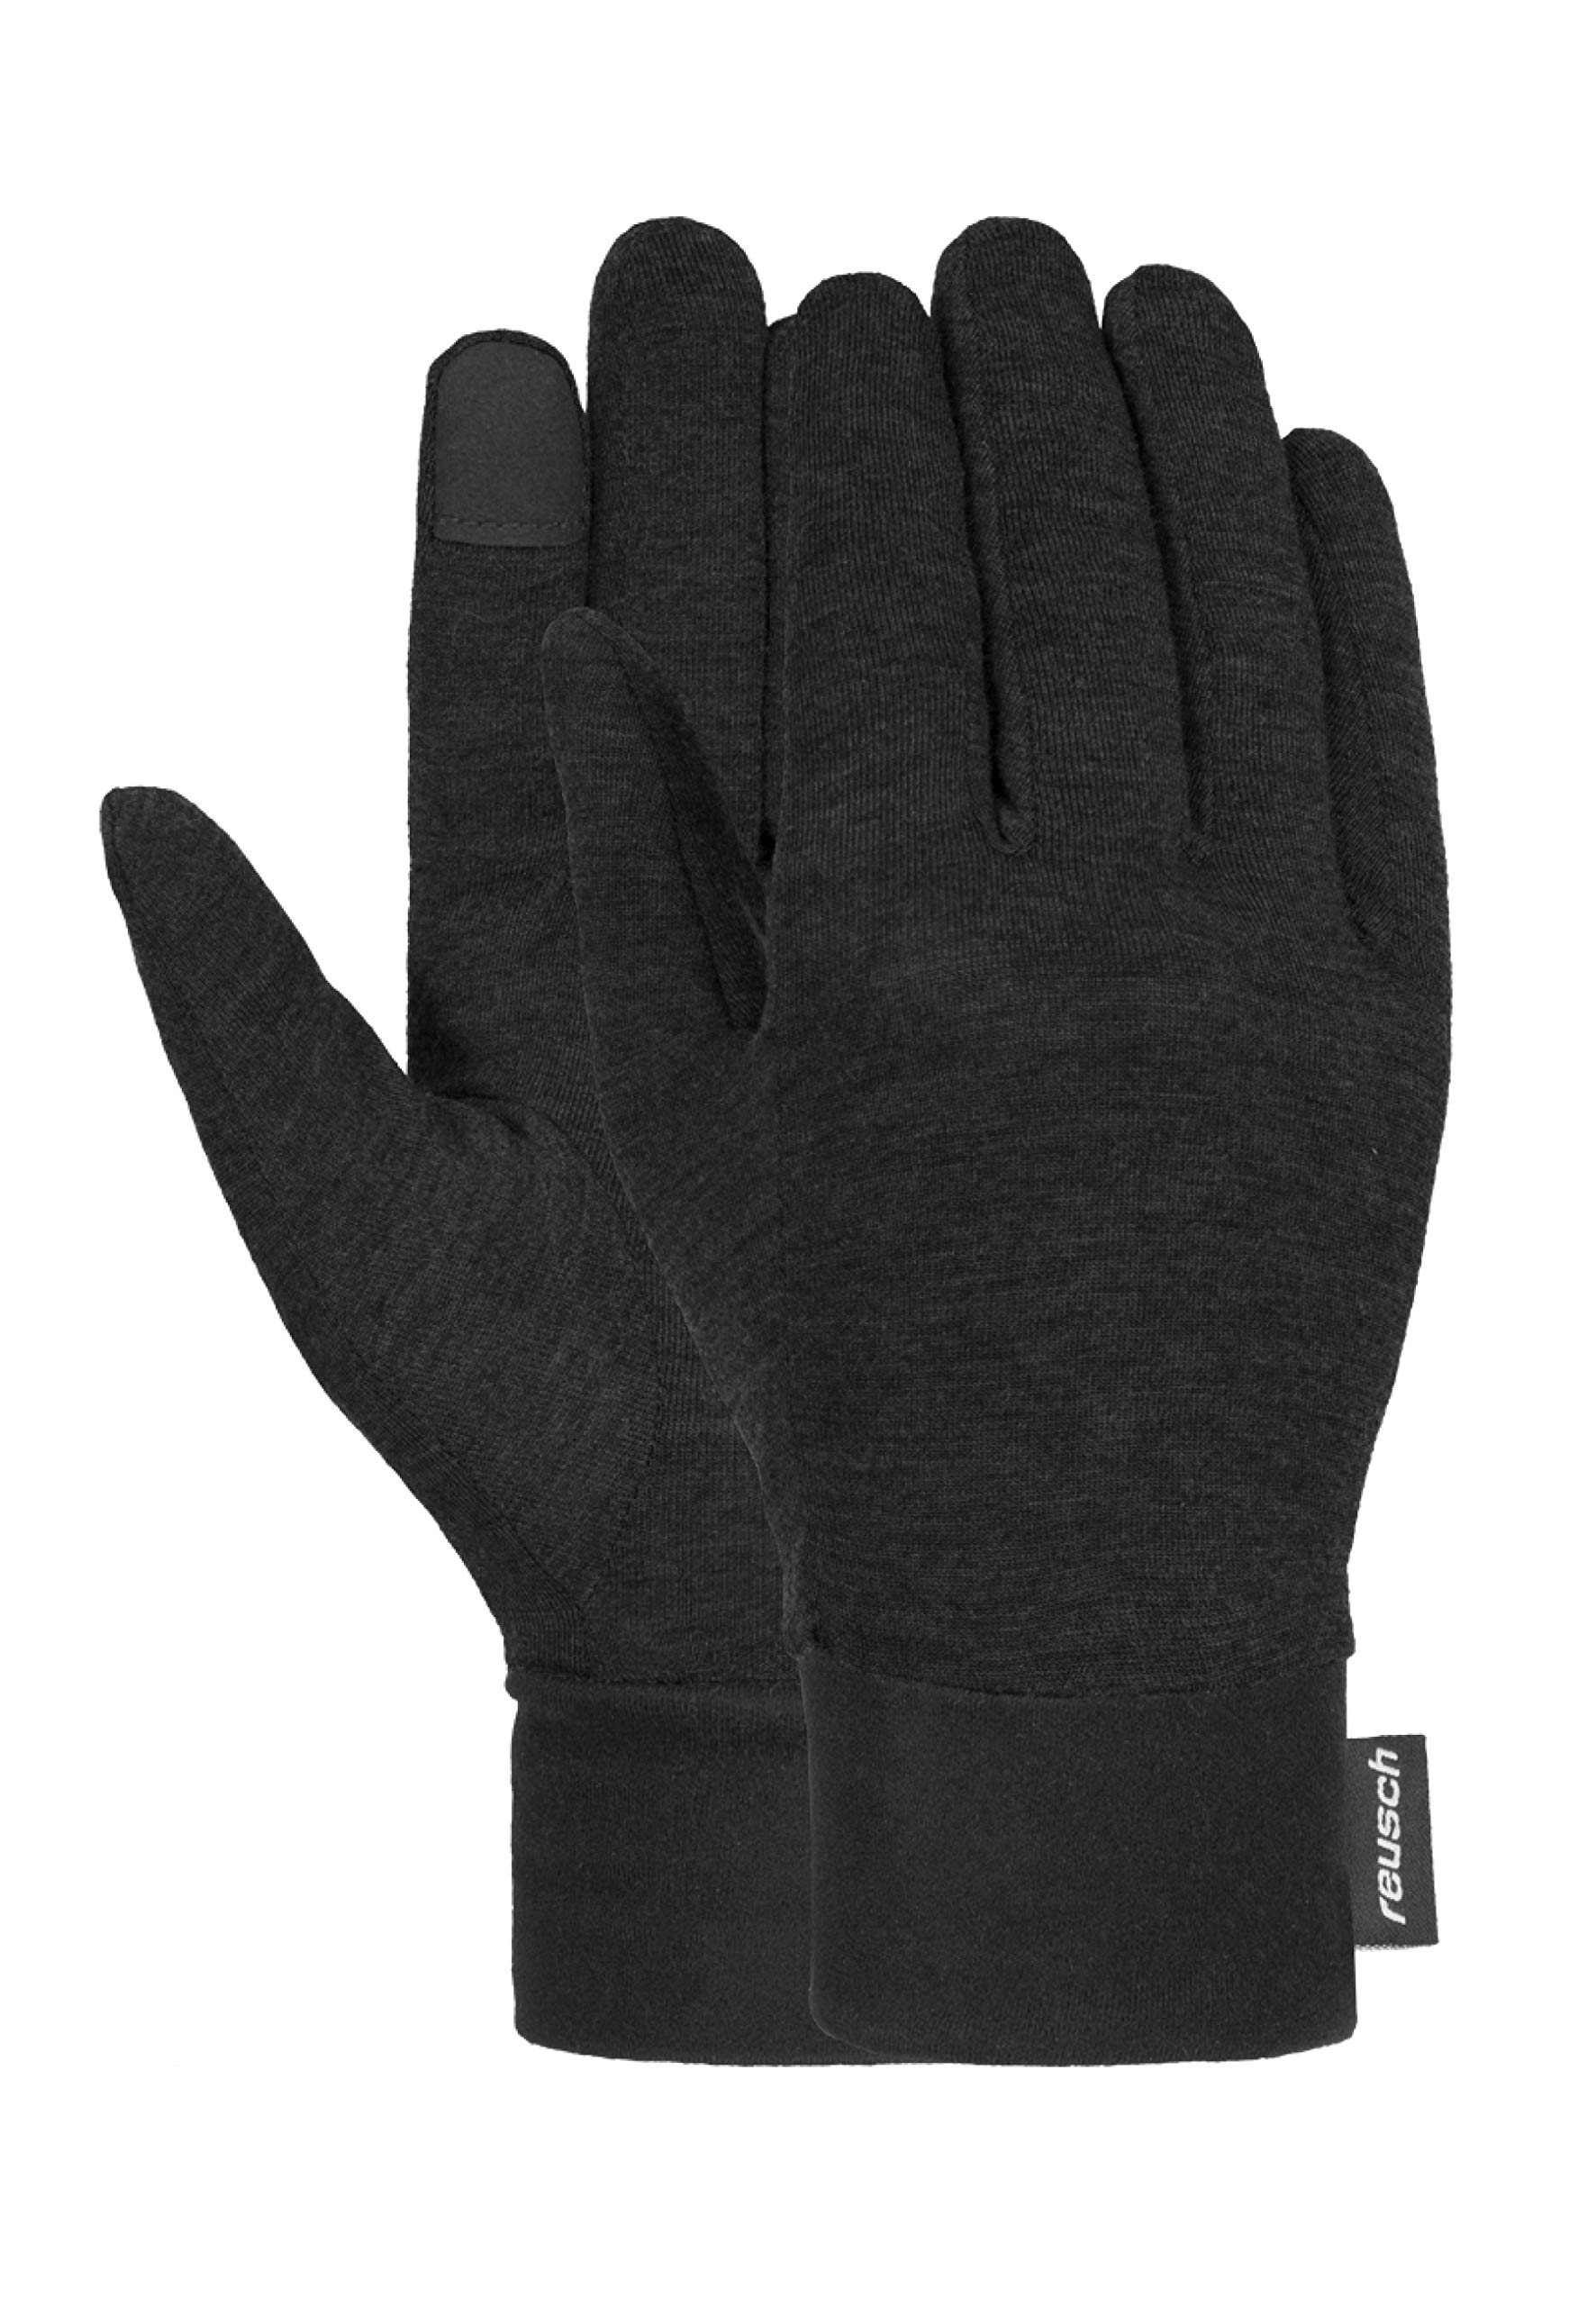 Reusch Herren Primaloft Silk Liner Handschuhe, Black, 6.5